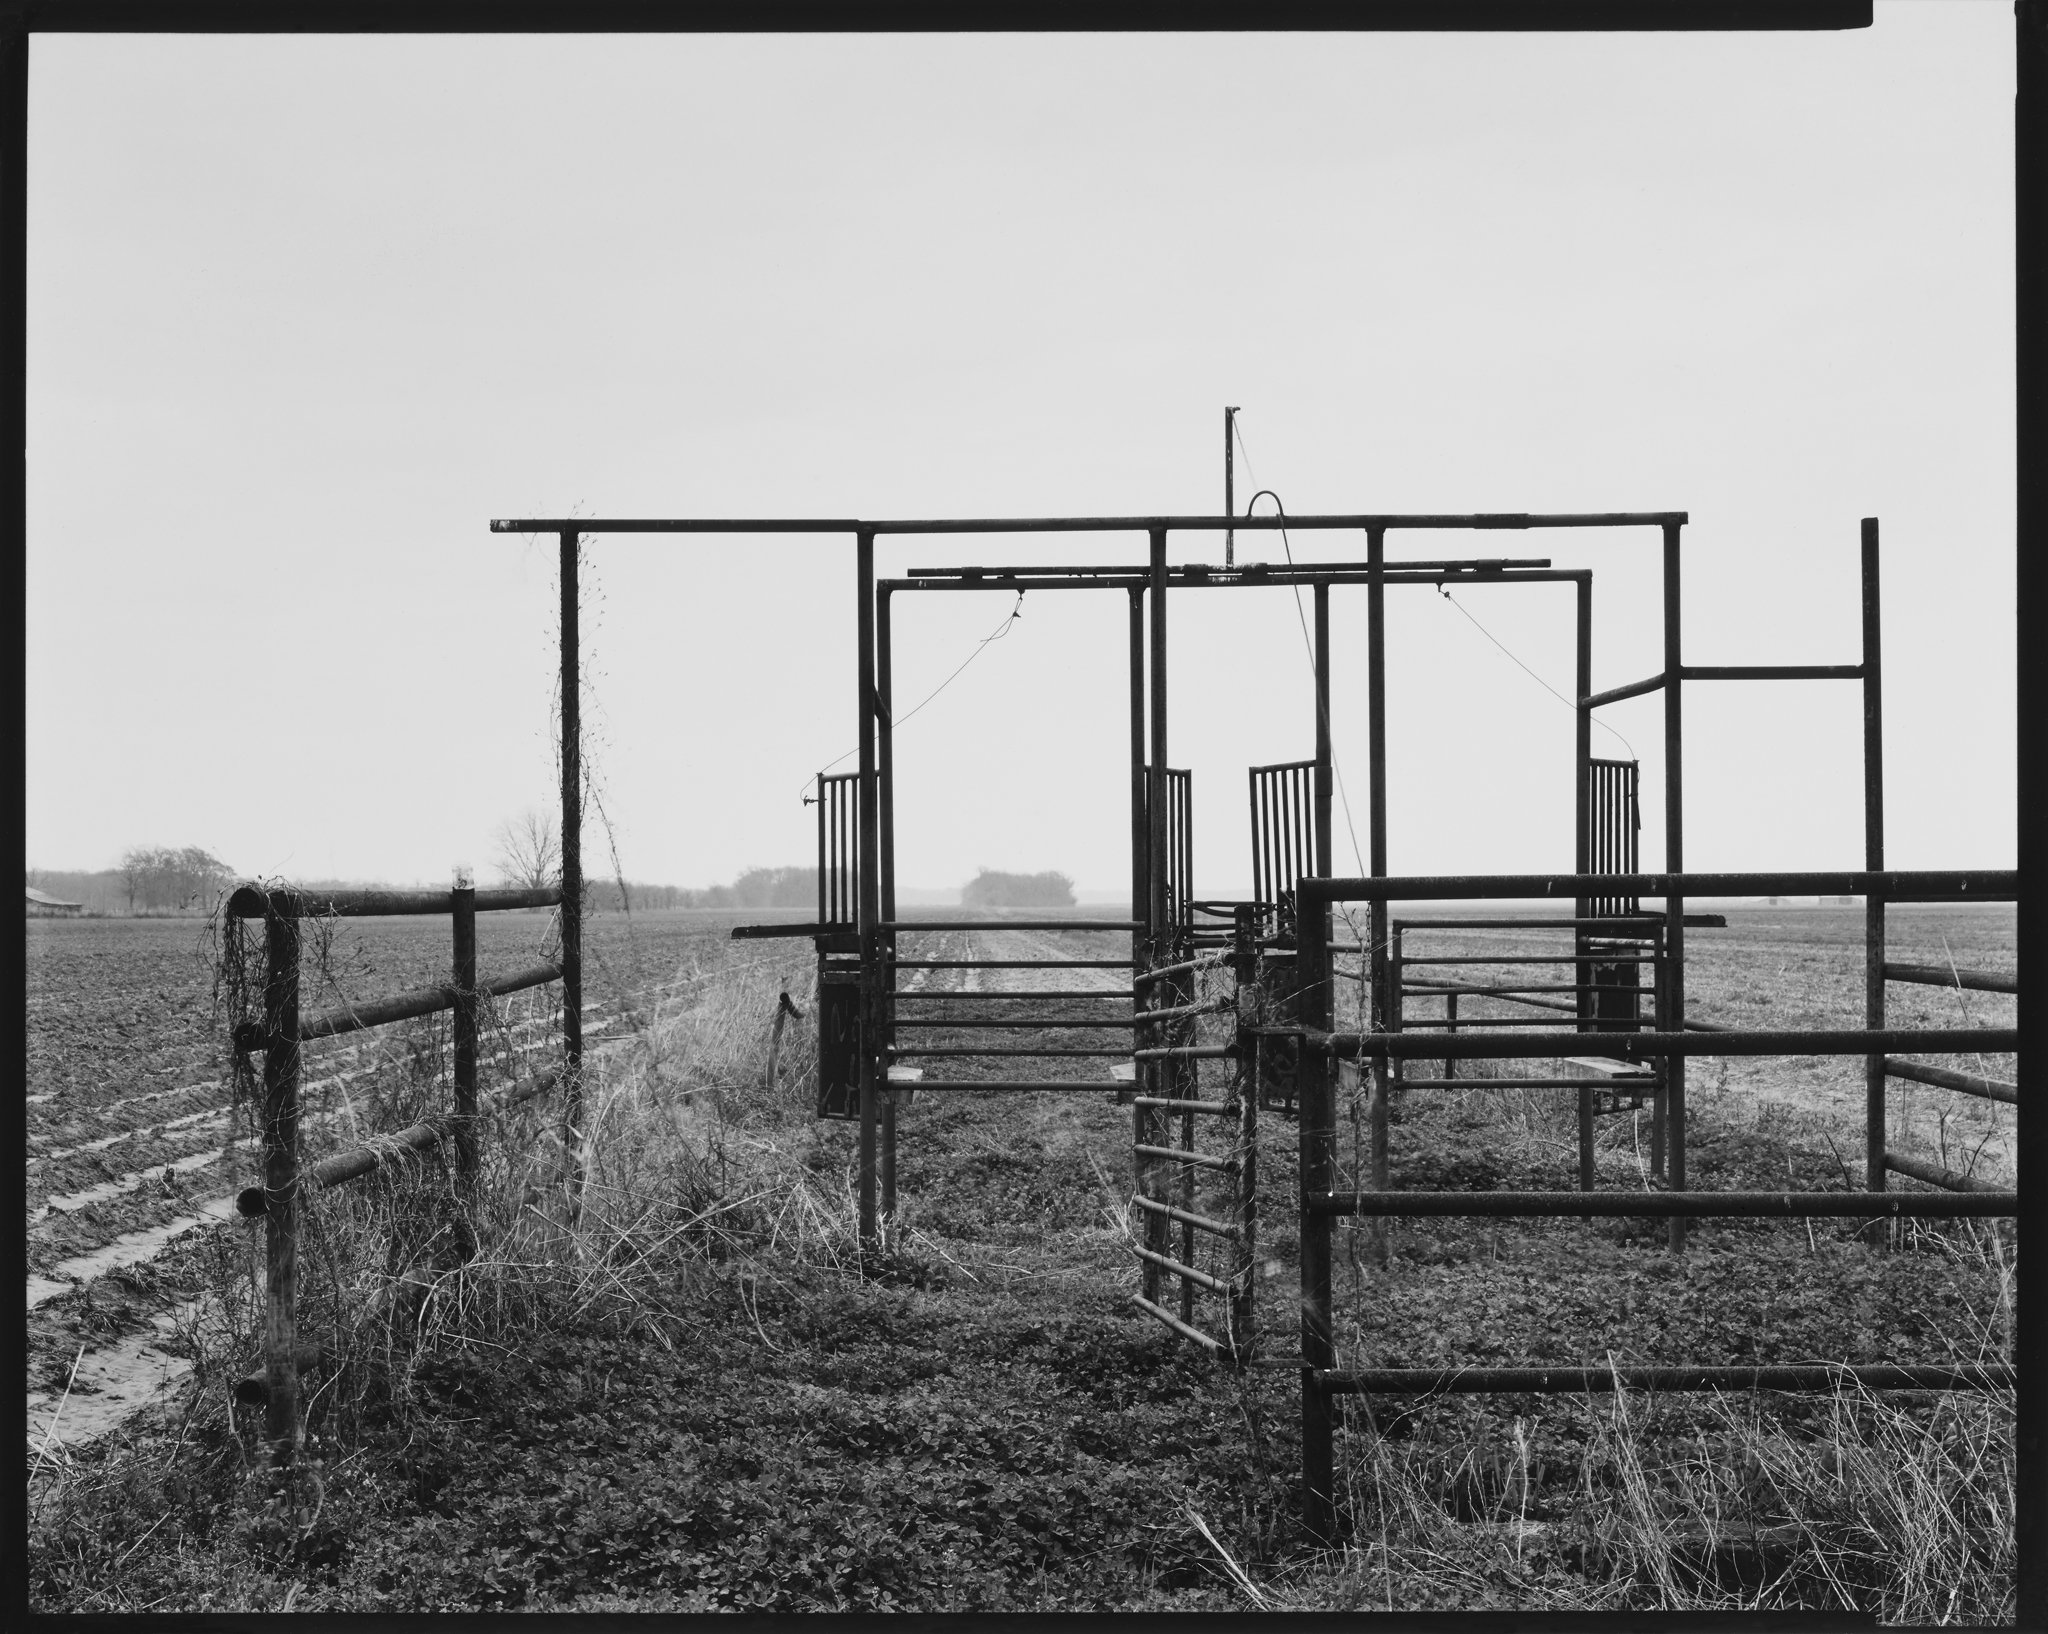 American Landscapes Portfolio_Field Gate, Louisiana_1981 © Nick Merrick.jpg